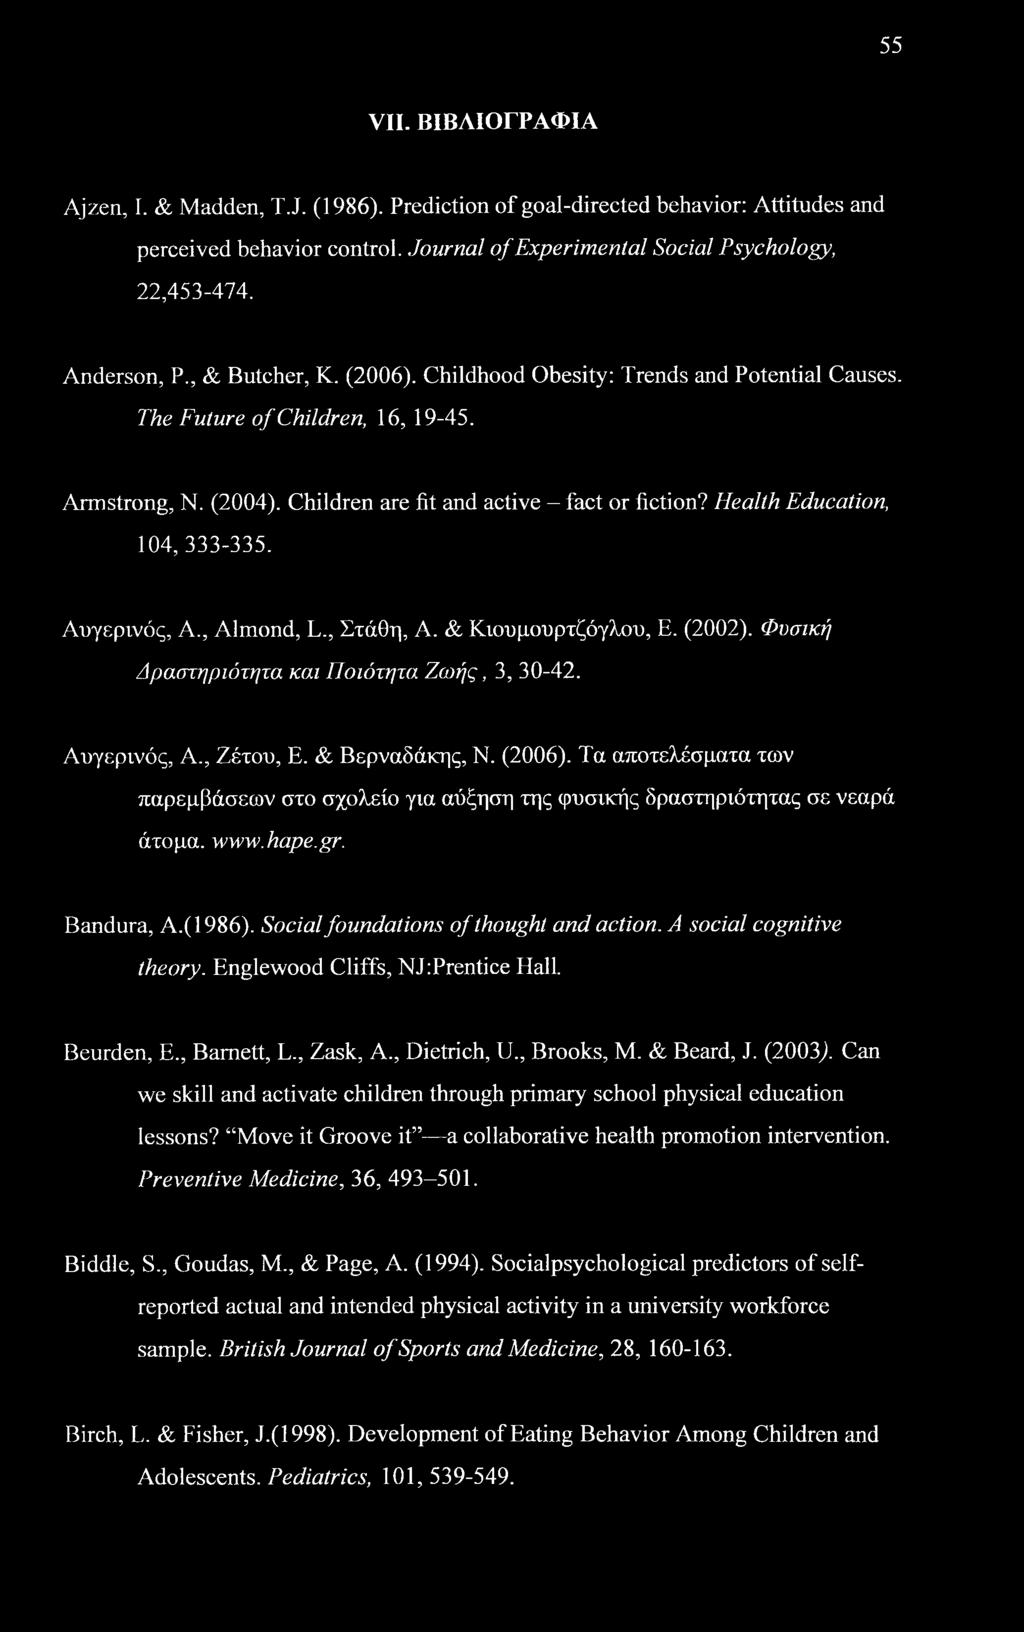 Health Education, 104, 333-335. Αυγερινός, A., Almond, L., Στάθη, A. & Κιουμουρτζόγλου, E. (2002). Φυσική Δραστηριότητα και Ποιότητα Ζωής, 3, 30-42. Αυγερινός, Α., Ζέτου, Ε. & Βερναδάκης, Ν. (2006).